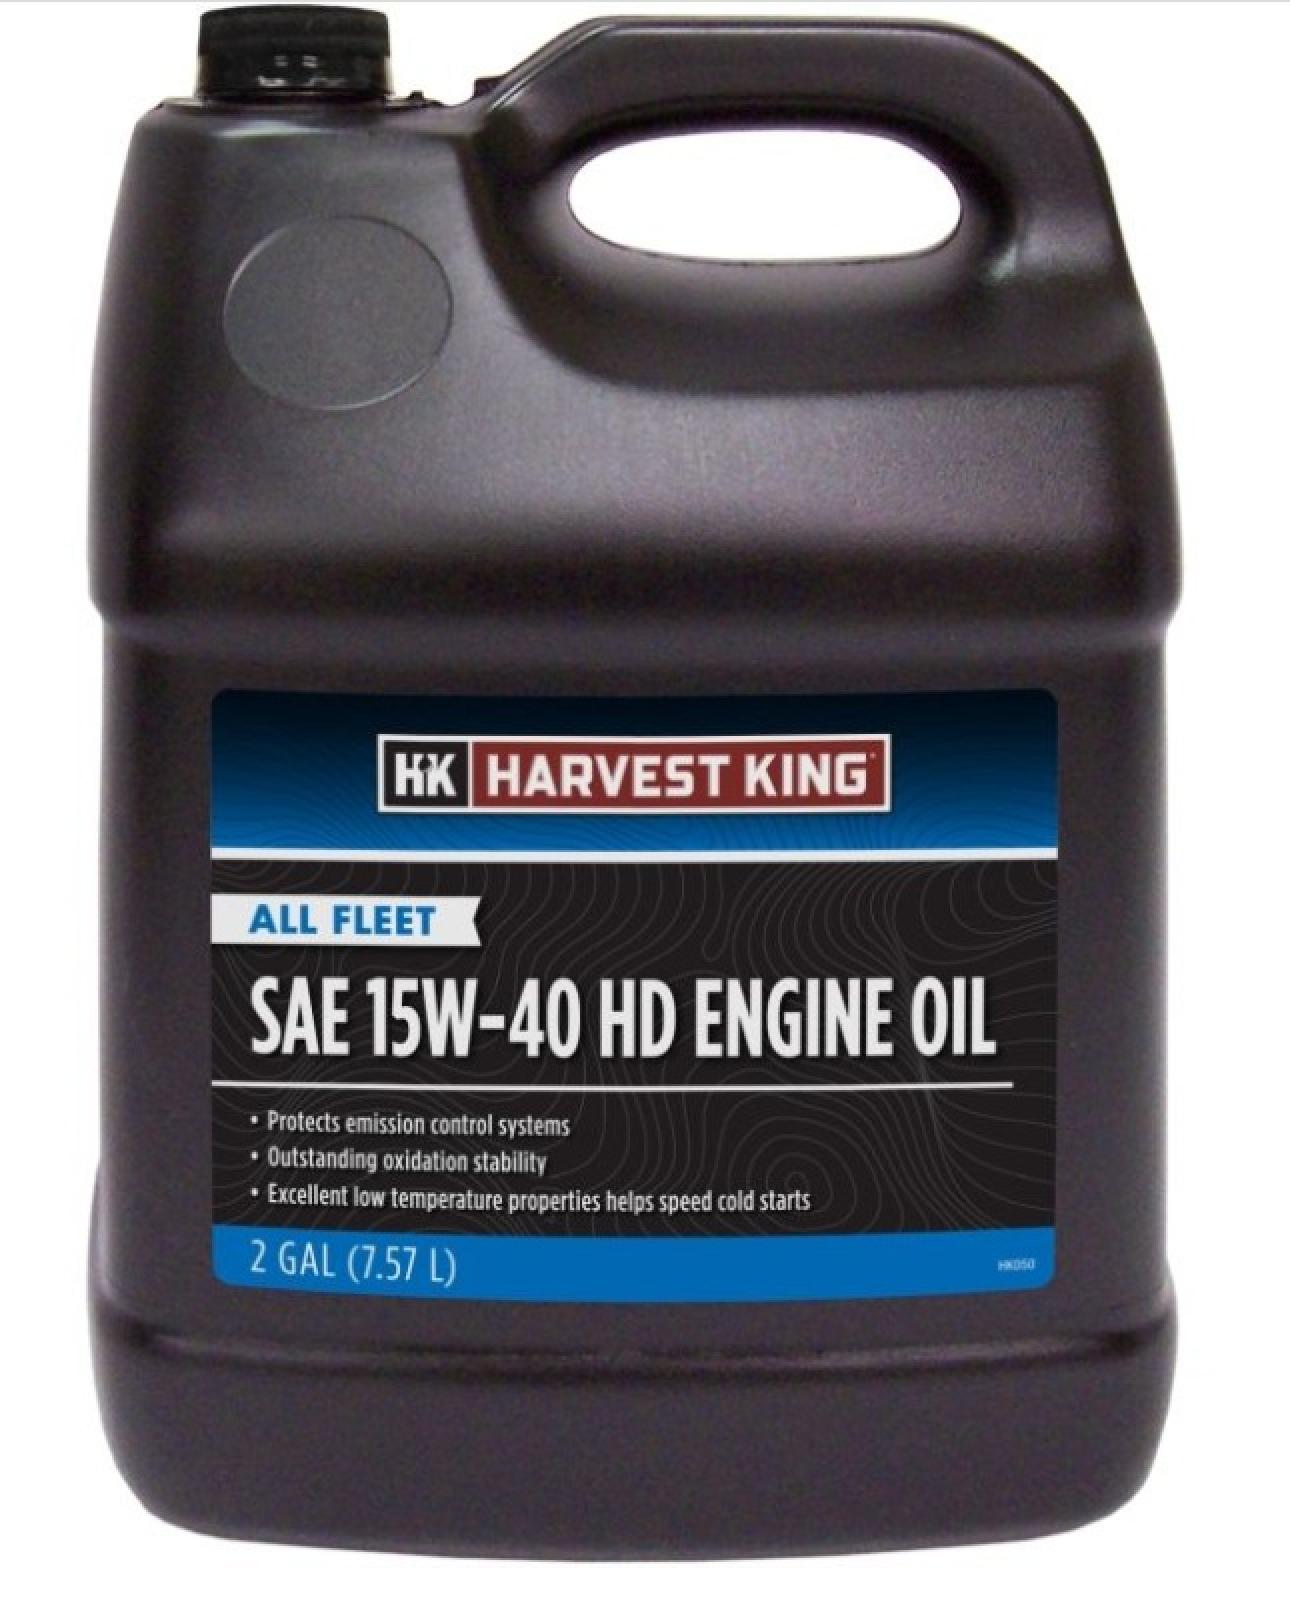 Harvest King All Fleet SAE 15W-40 HD Diesel Engine Oil